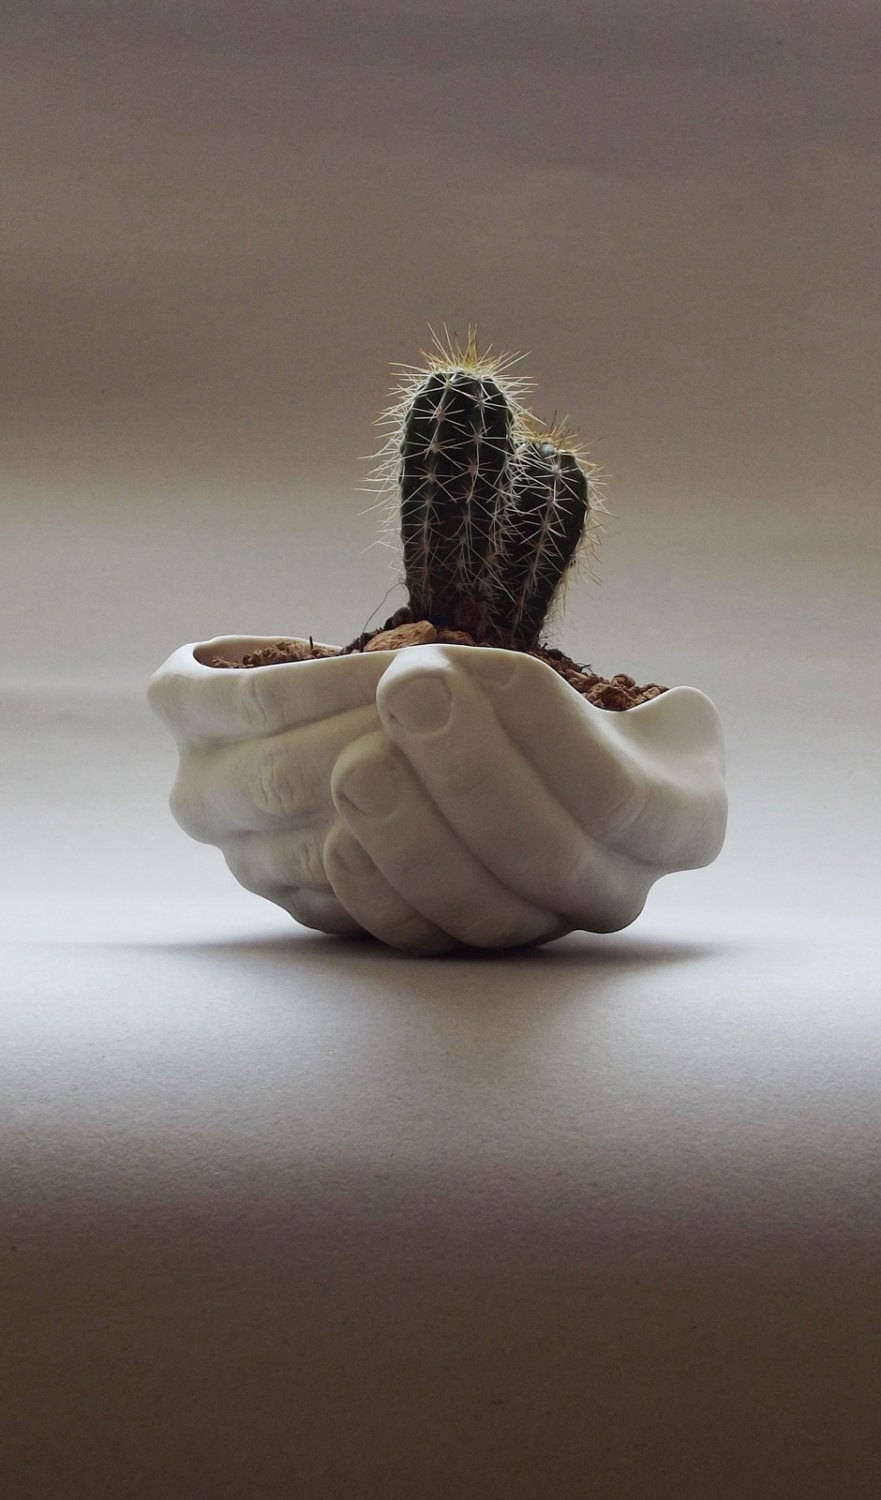 Ceramic Hand-Panit Wall Hanging Succulent Plants Pots Flower/cactus pots Holder 